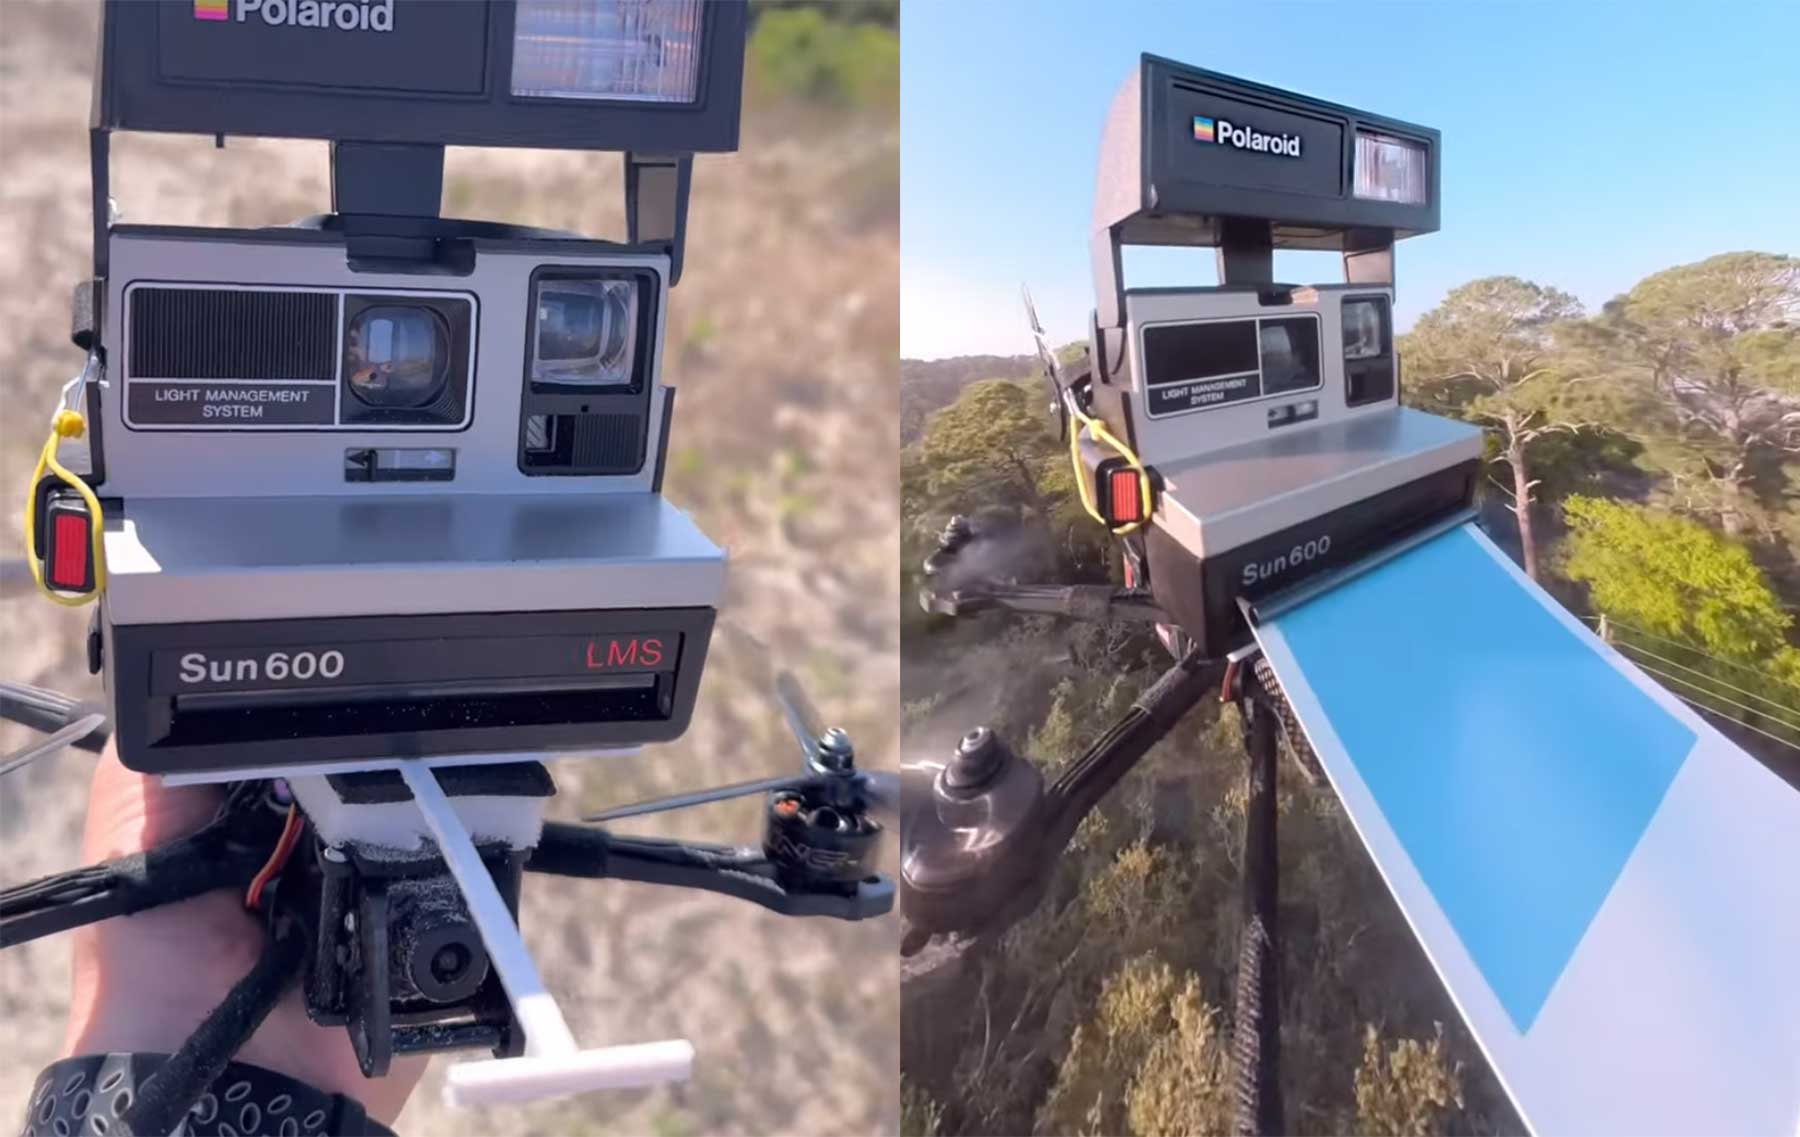 Alte Polaroidkamera an Drohne befestigt polaroid-an-drohne-befestigt 